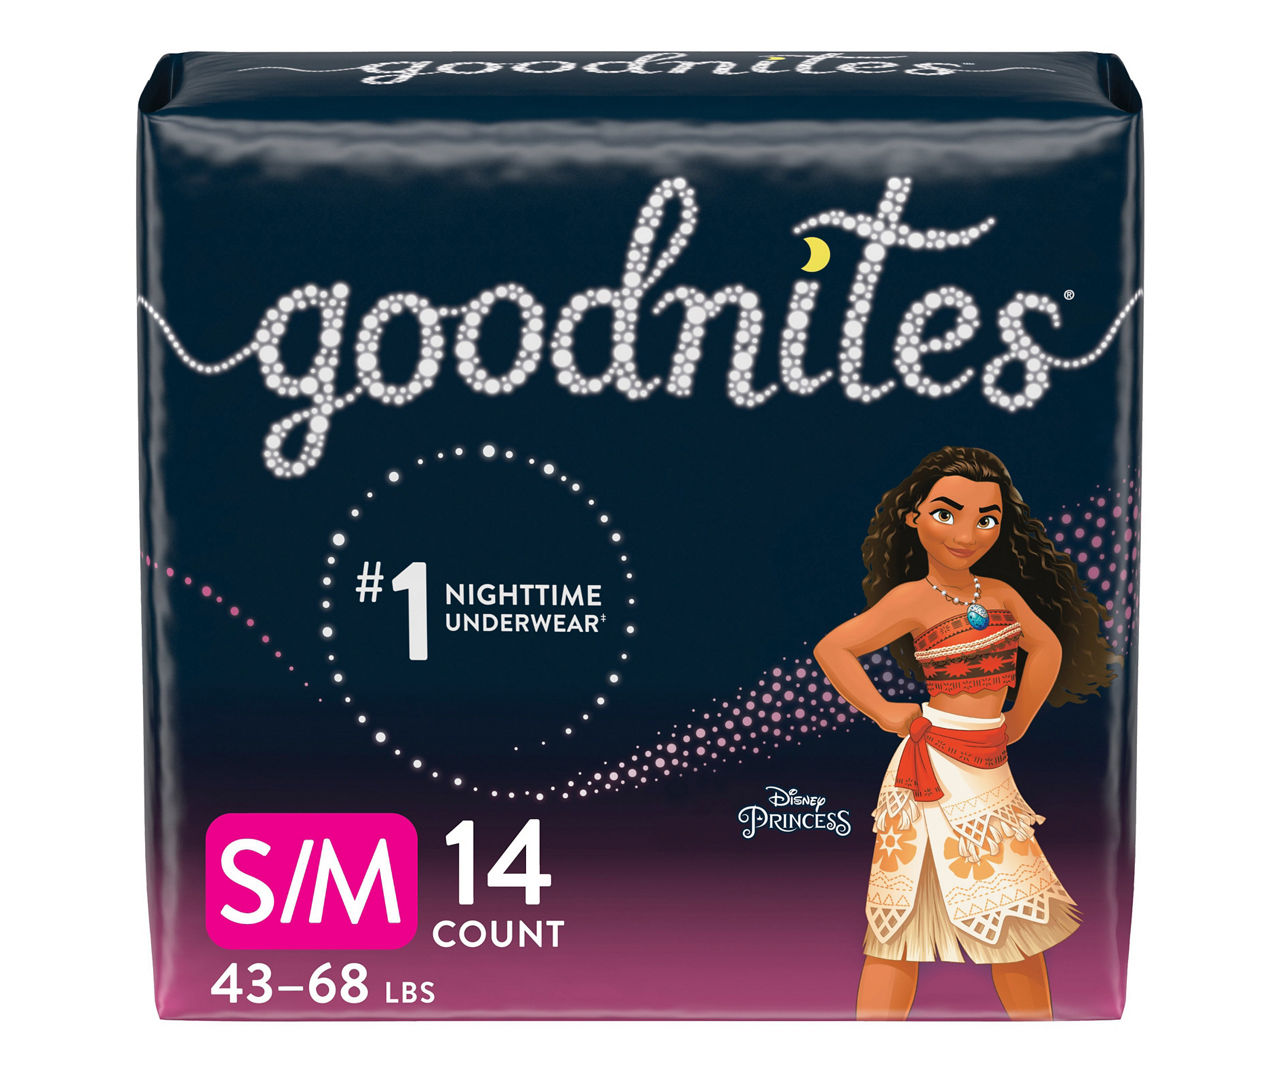 GoodNites Underwear, Nighttime, L, Girls - Smart & Final